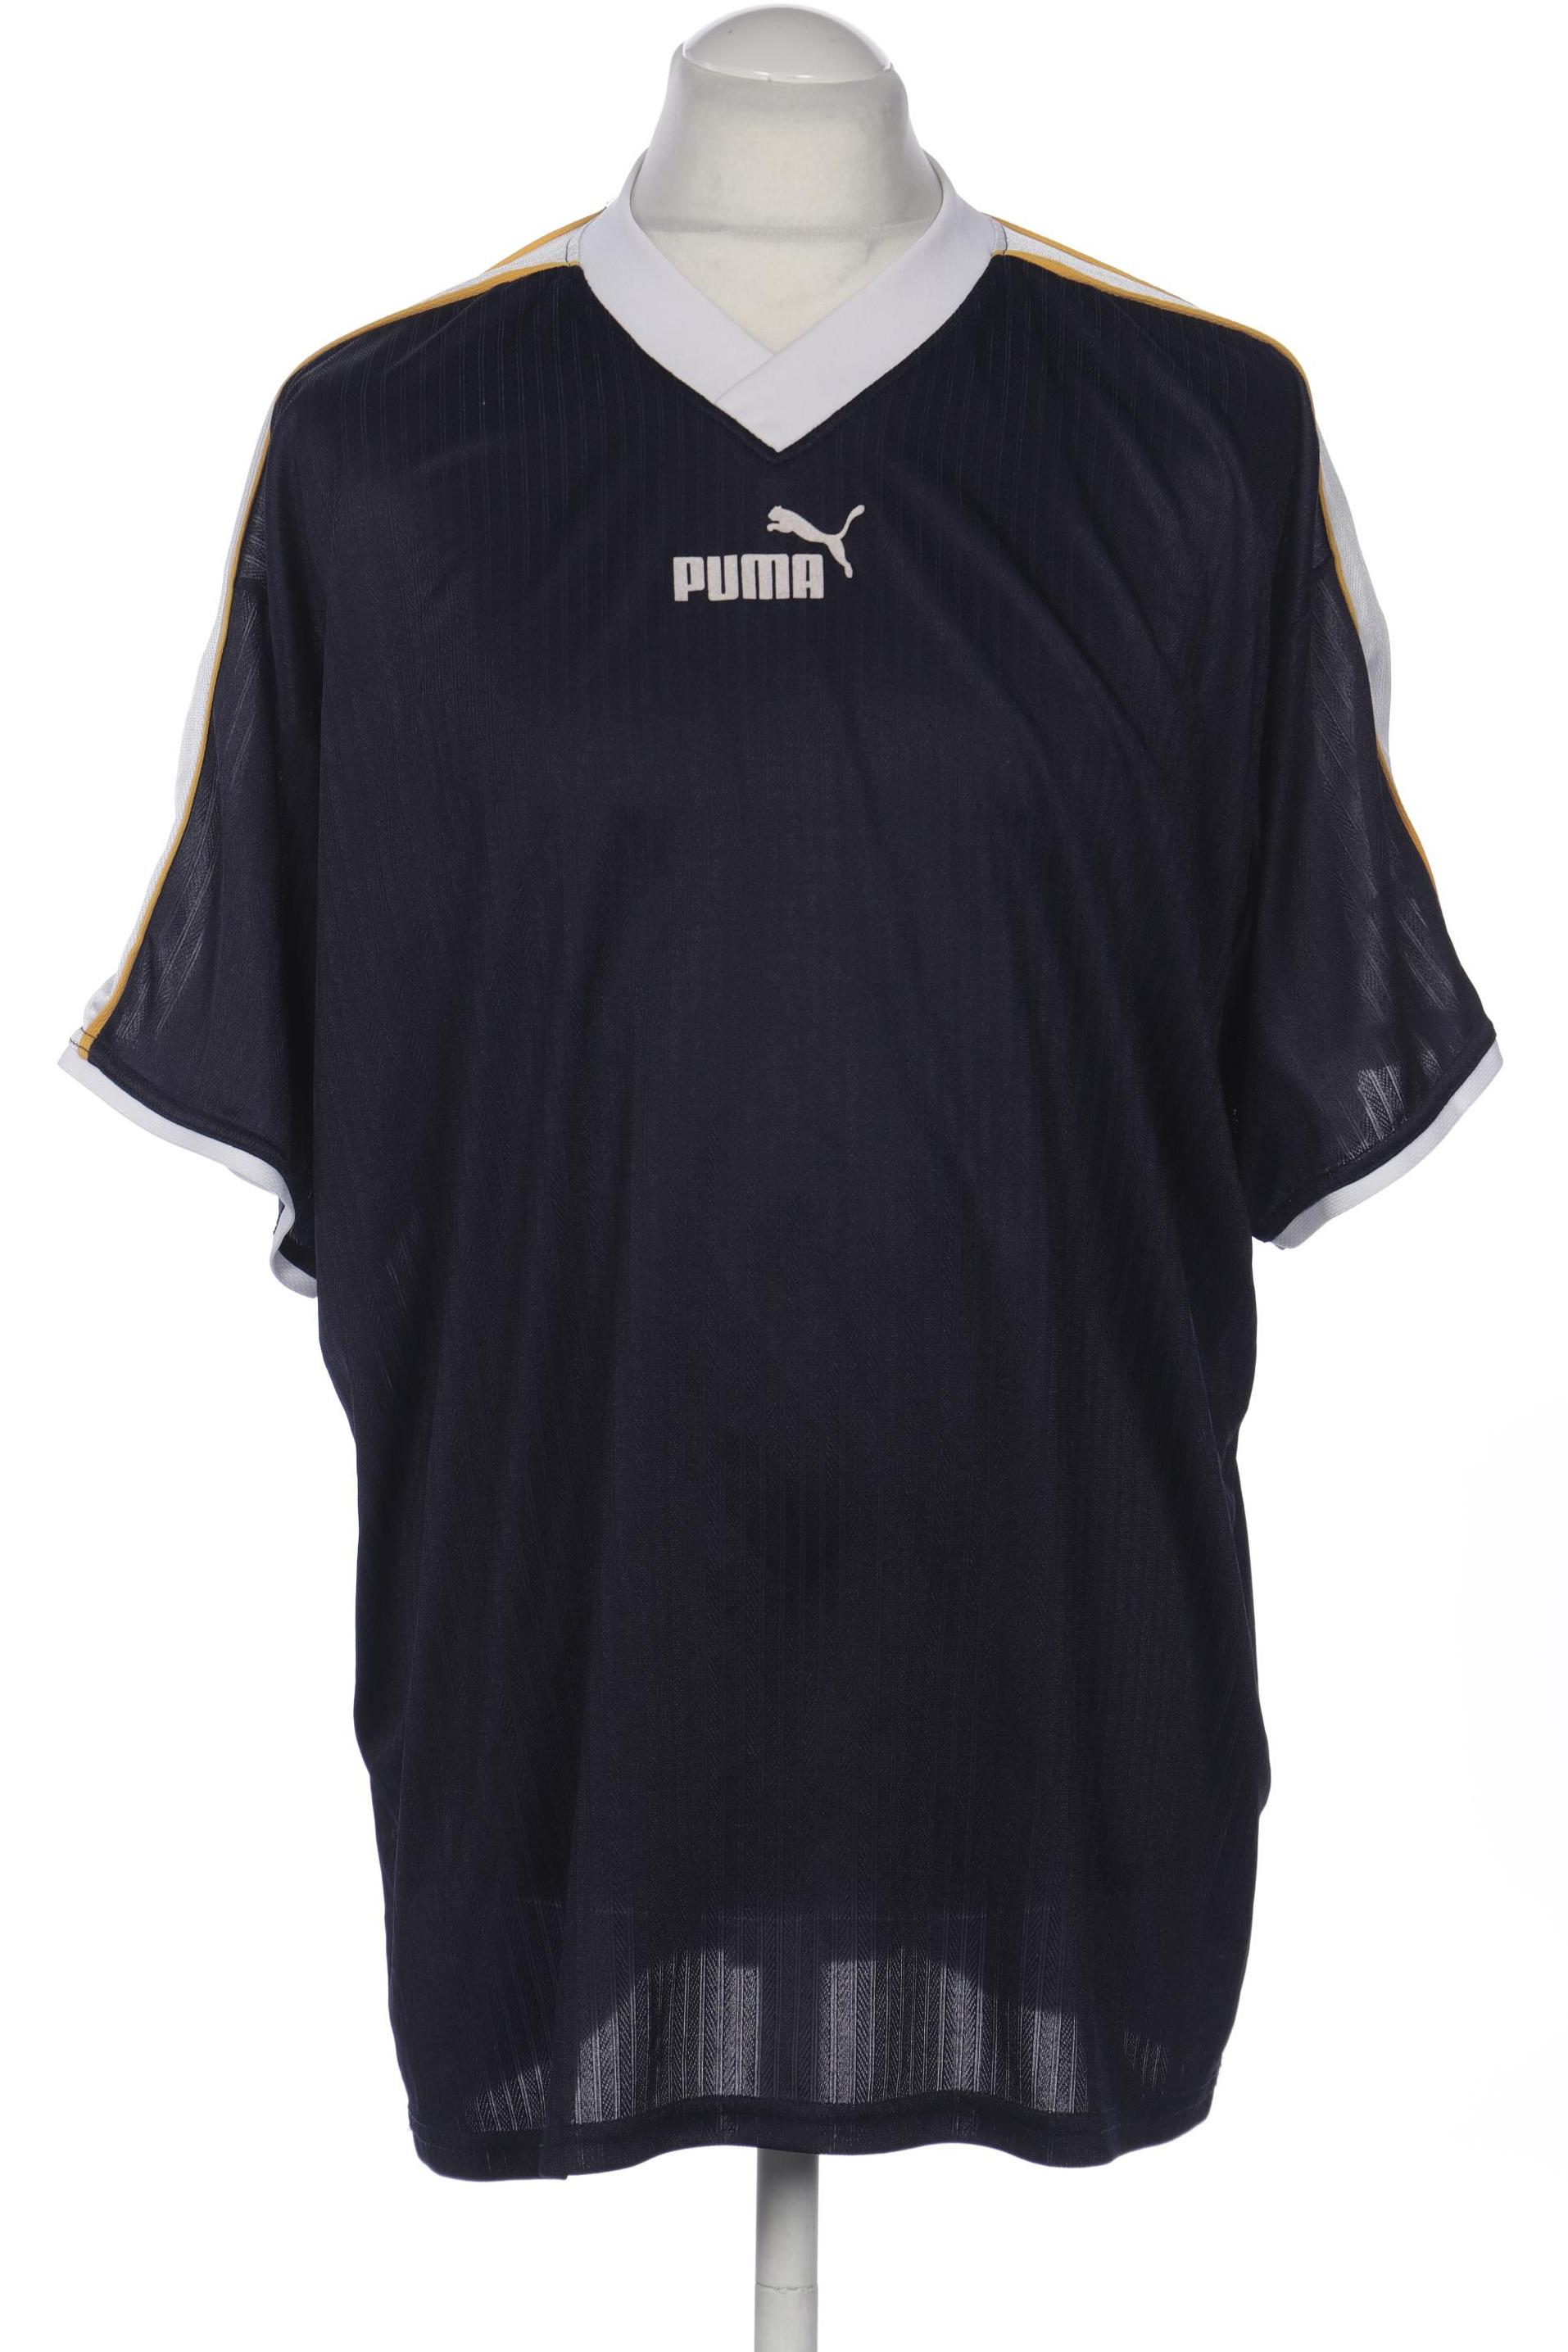 PUMA Herren T-Shirt, marineblau von Puma